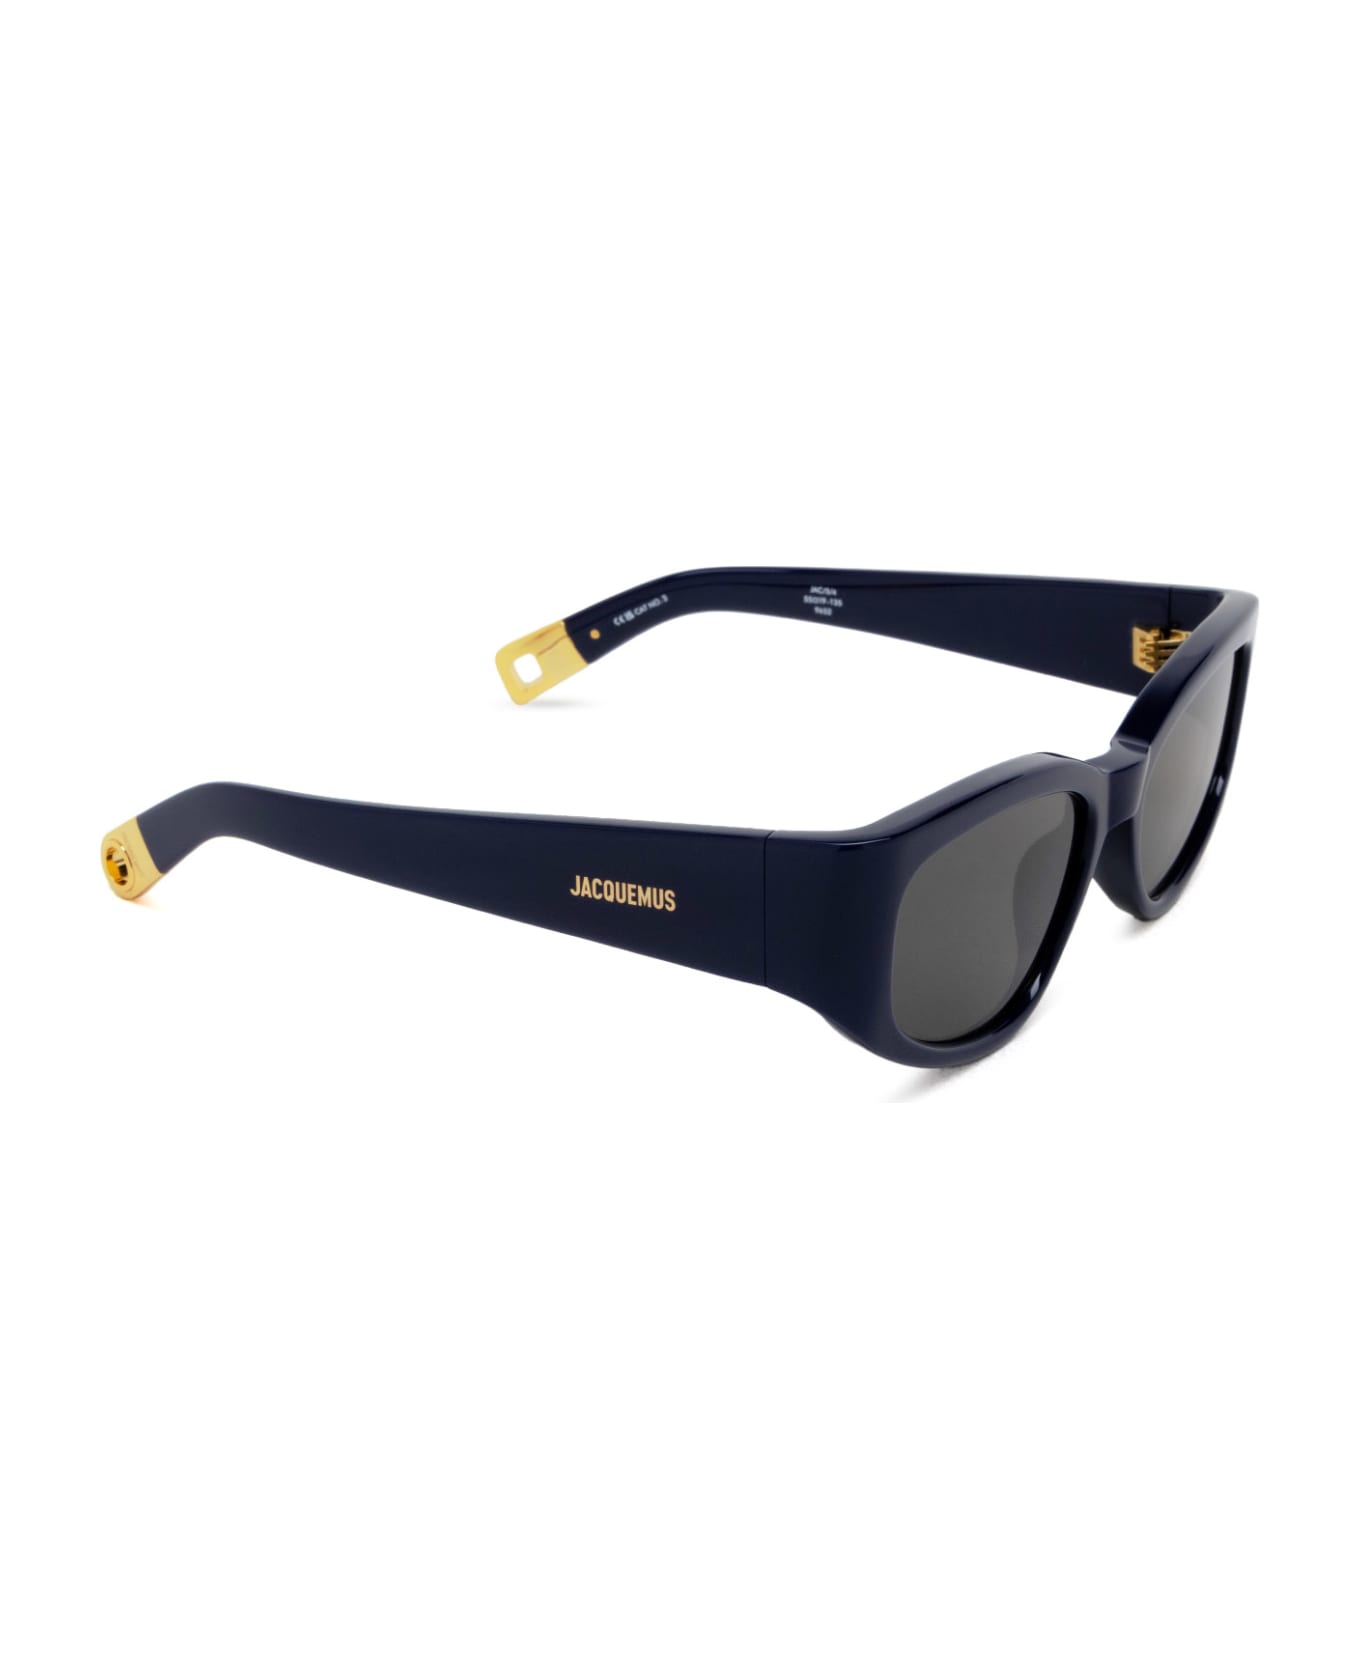 Jacquemus Jac5 Navy Sunglasses - Navy